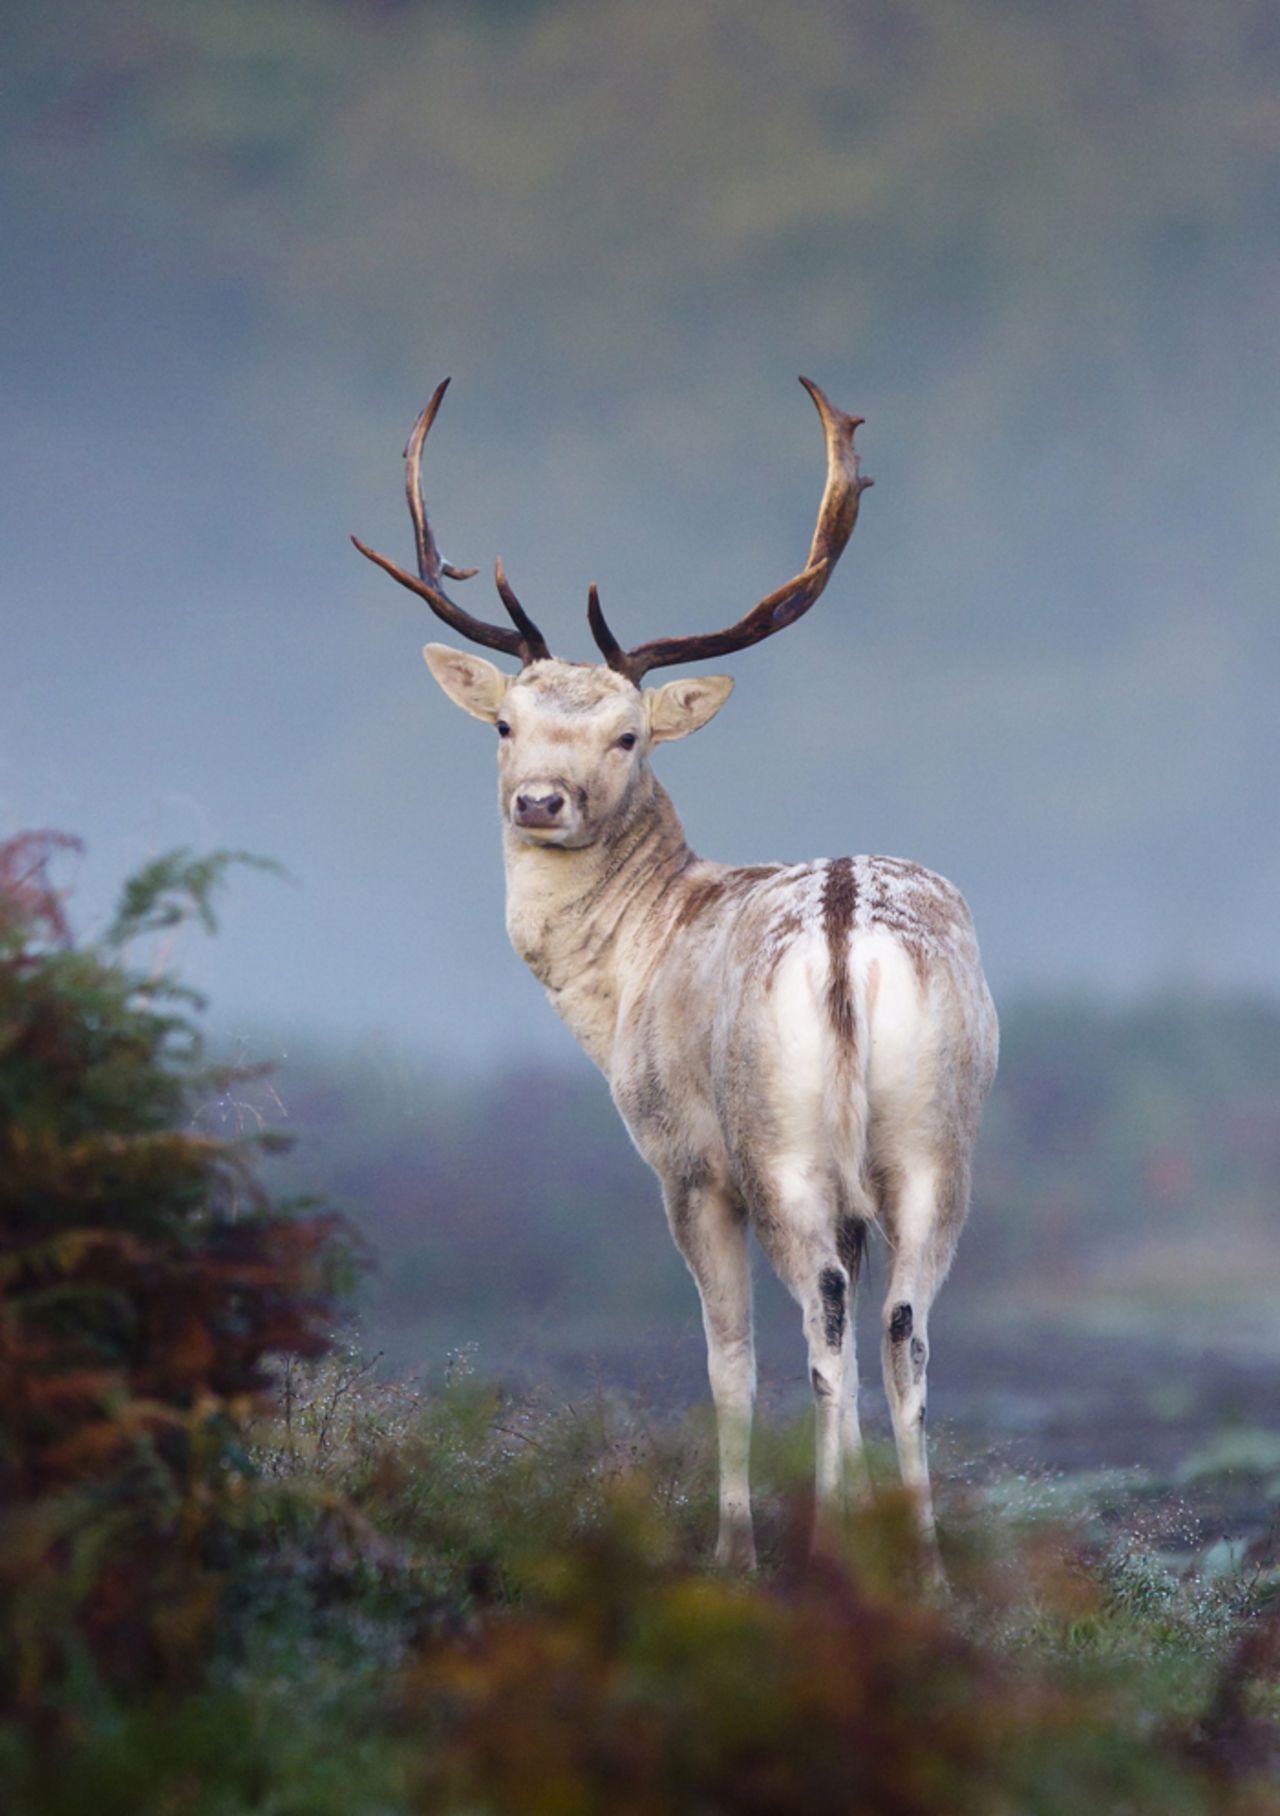 ANIMAL PORTRAITS: "Mystical Mist, Fallow Deer" by Mark Smith